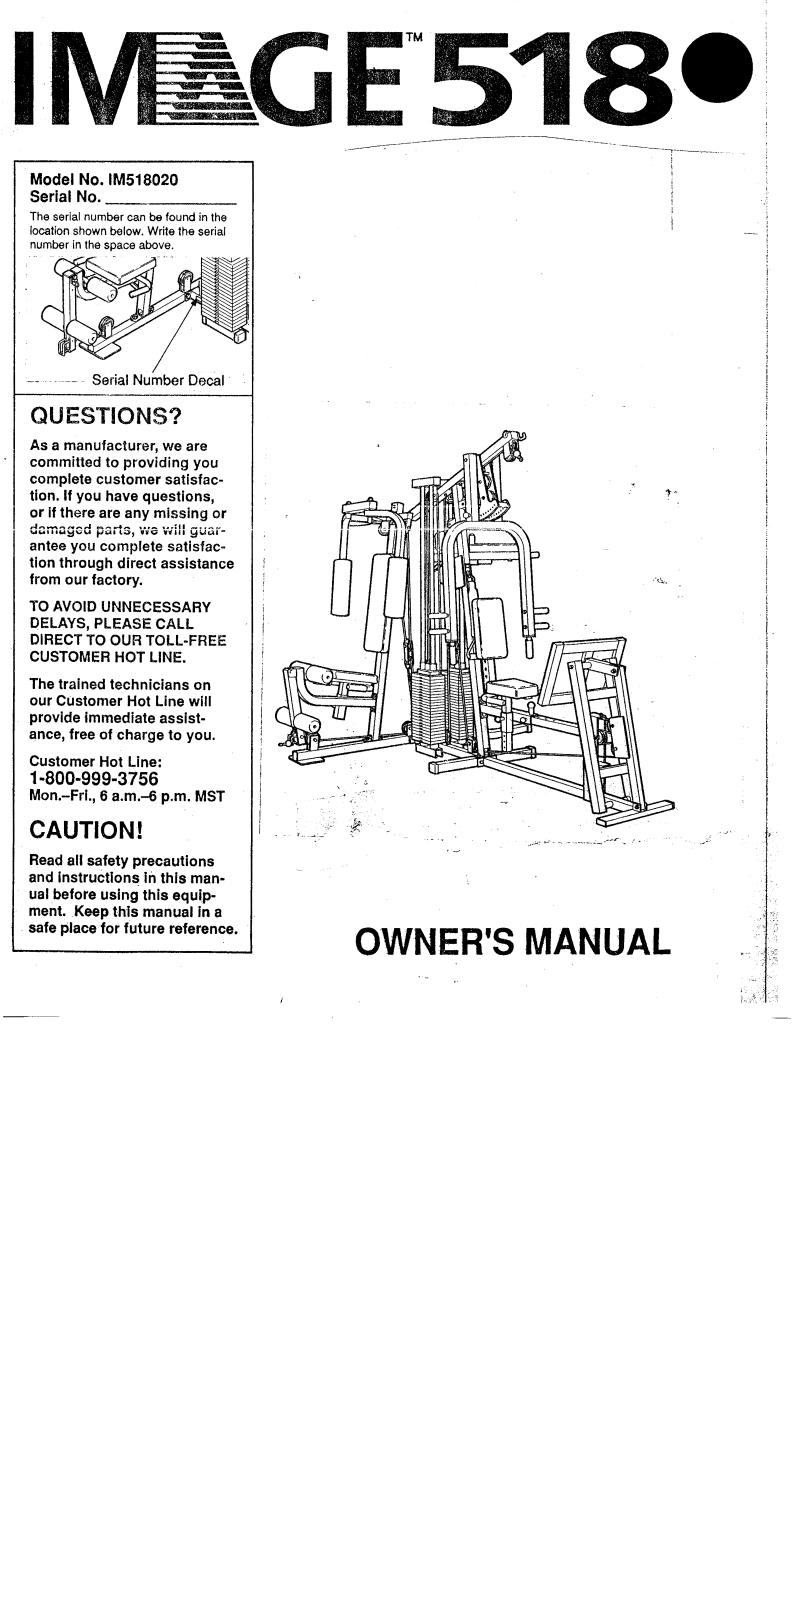 Image IM5180, IM518020 Owner's Manual